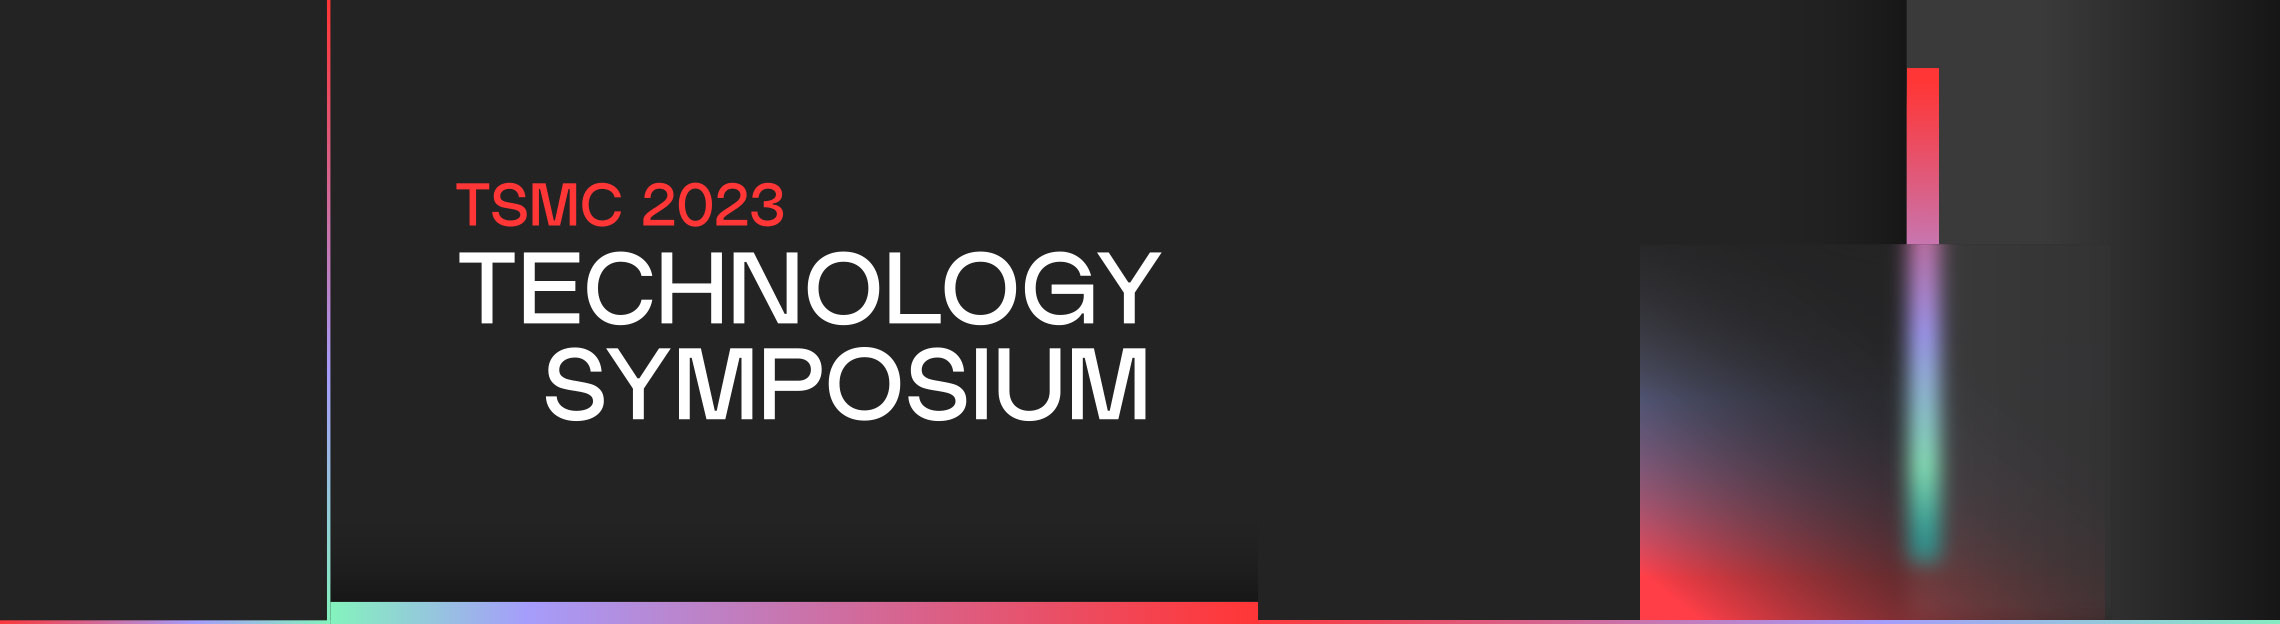 TSMC 2023 Technology Symposium